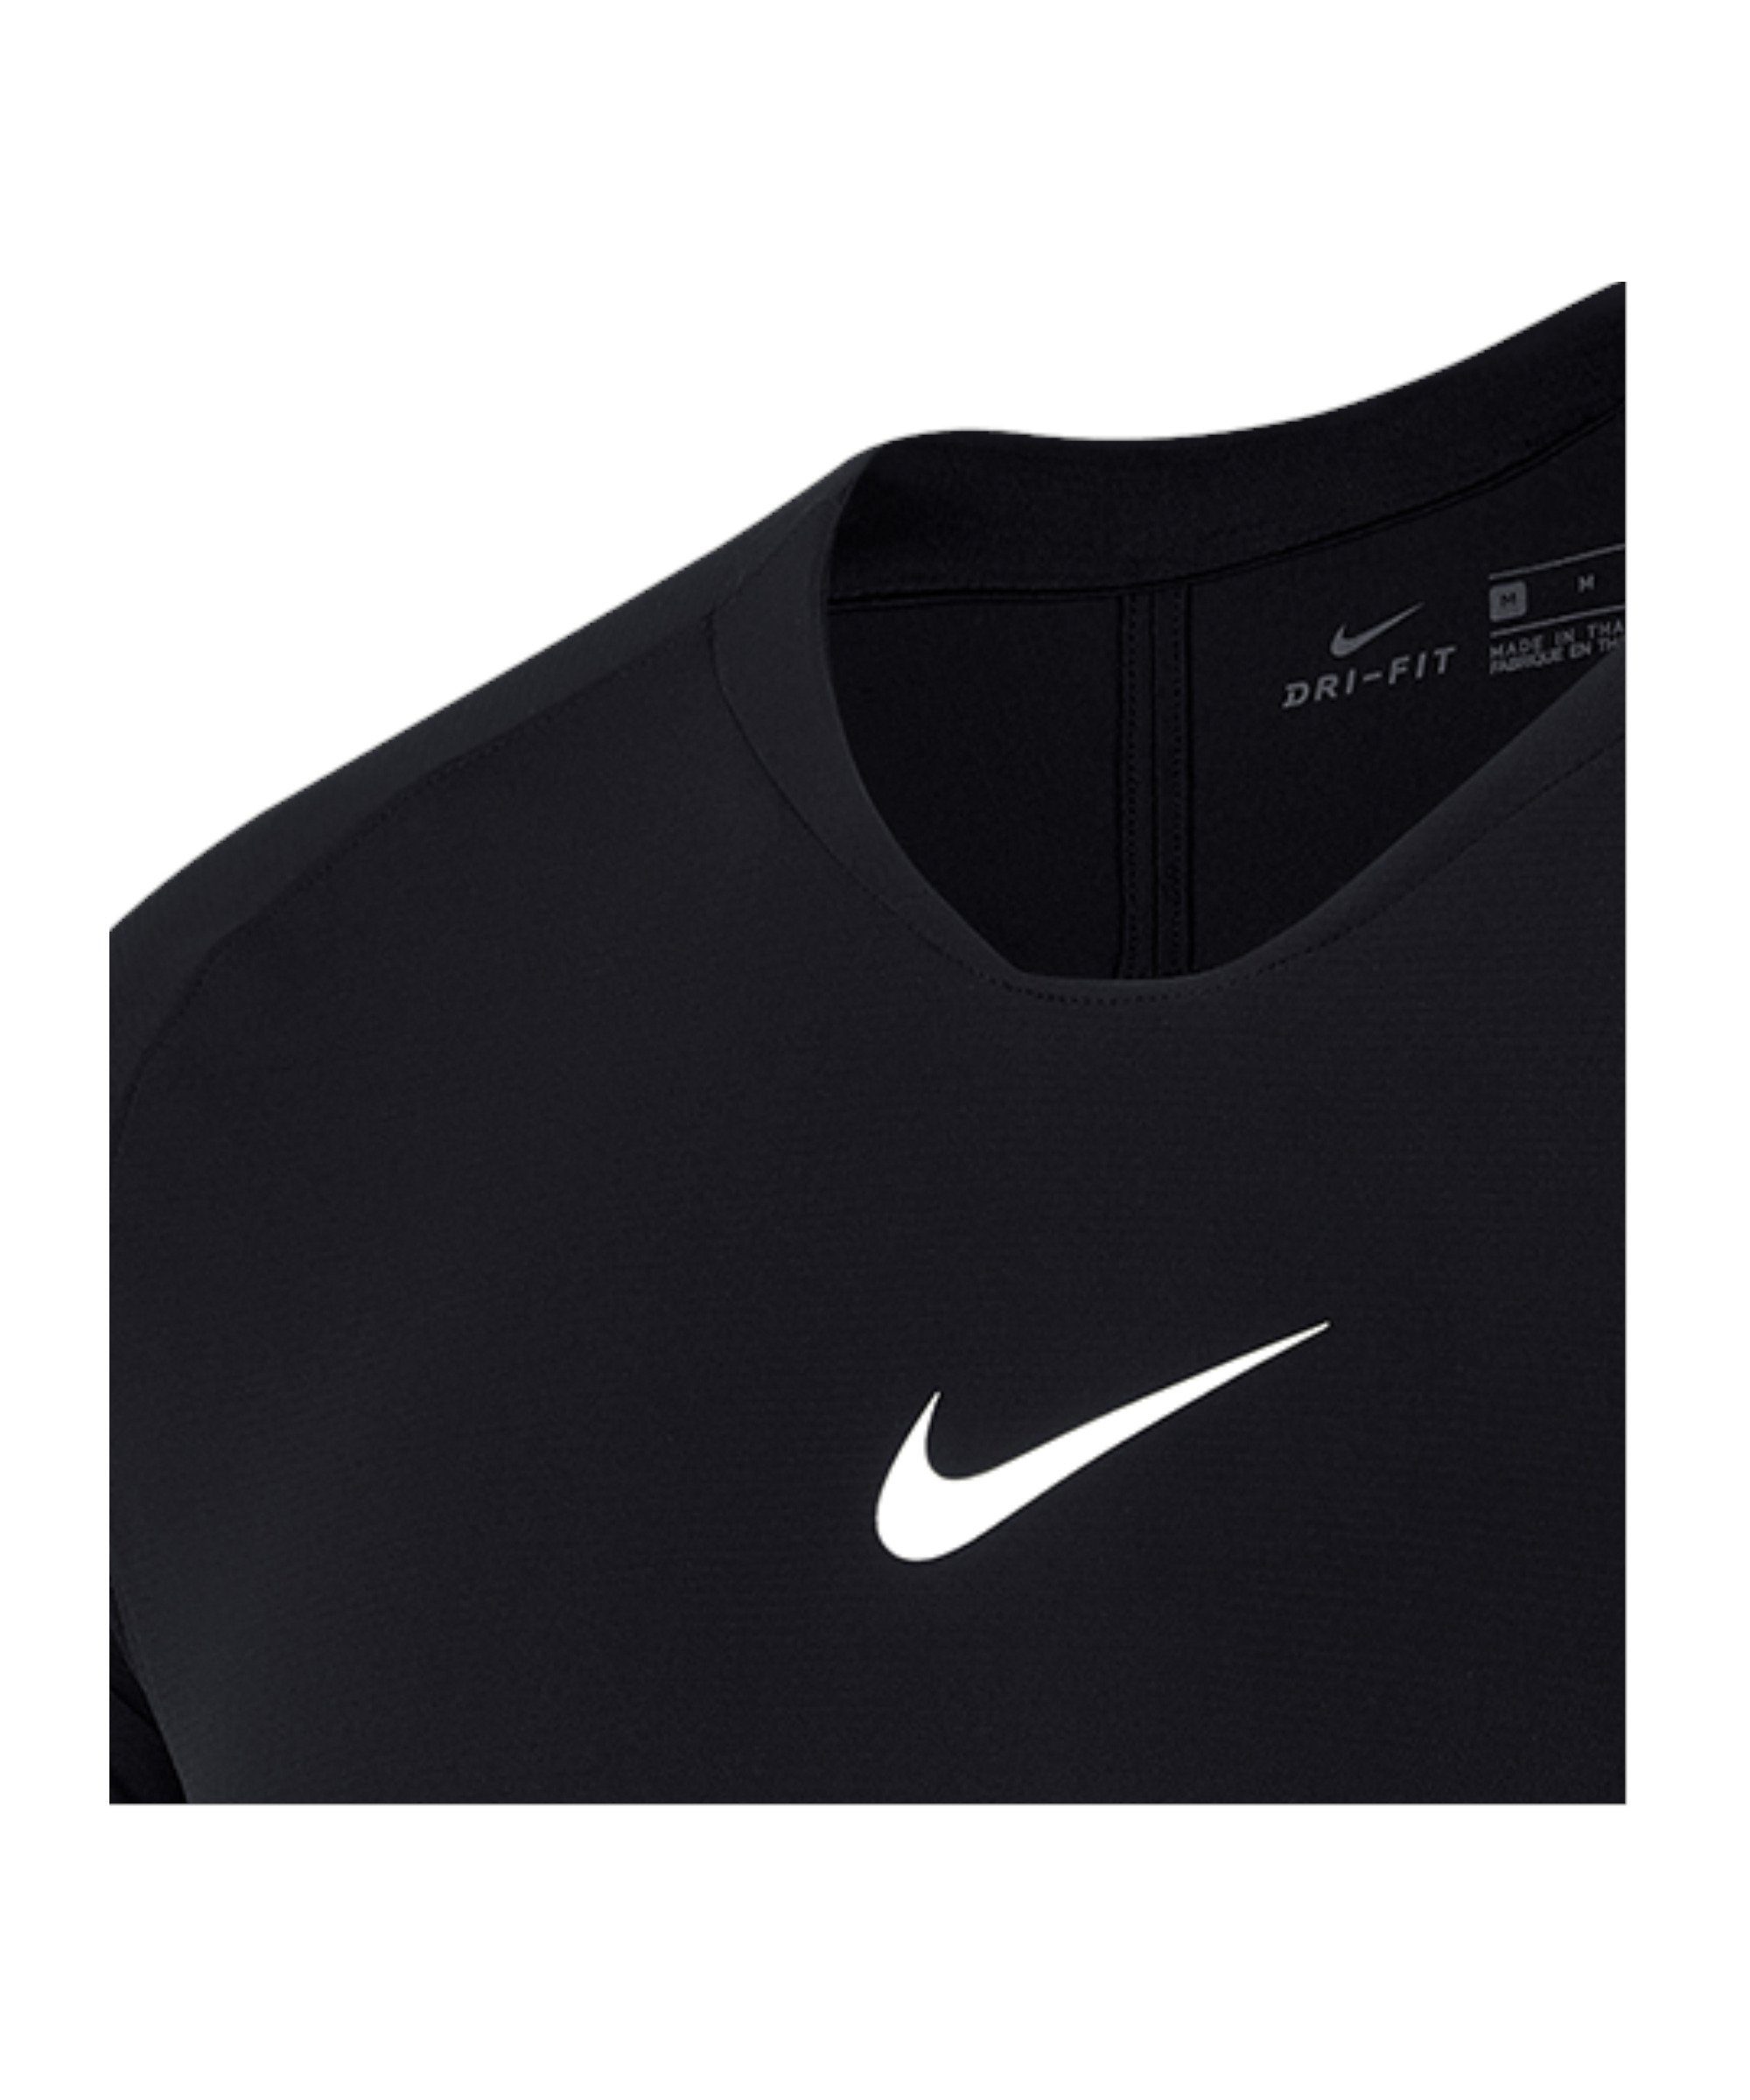 Kids First Park Nike schwarzweiss Funktionsshirt Top Layer Daumenöffnung